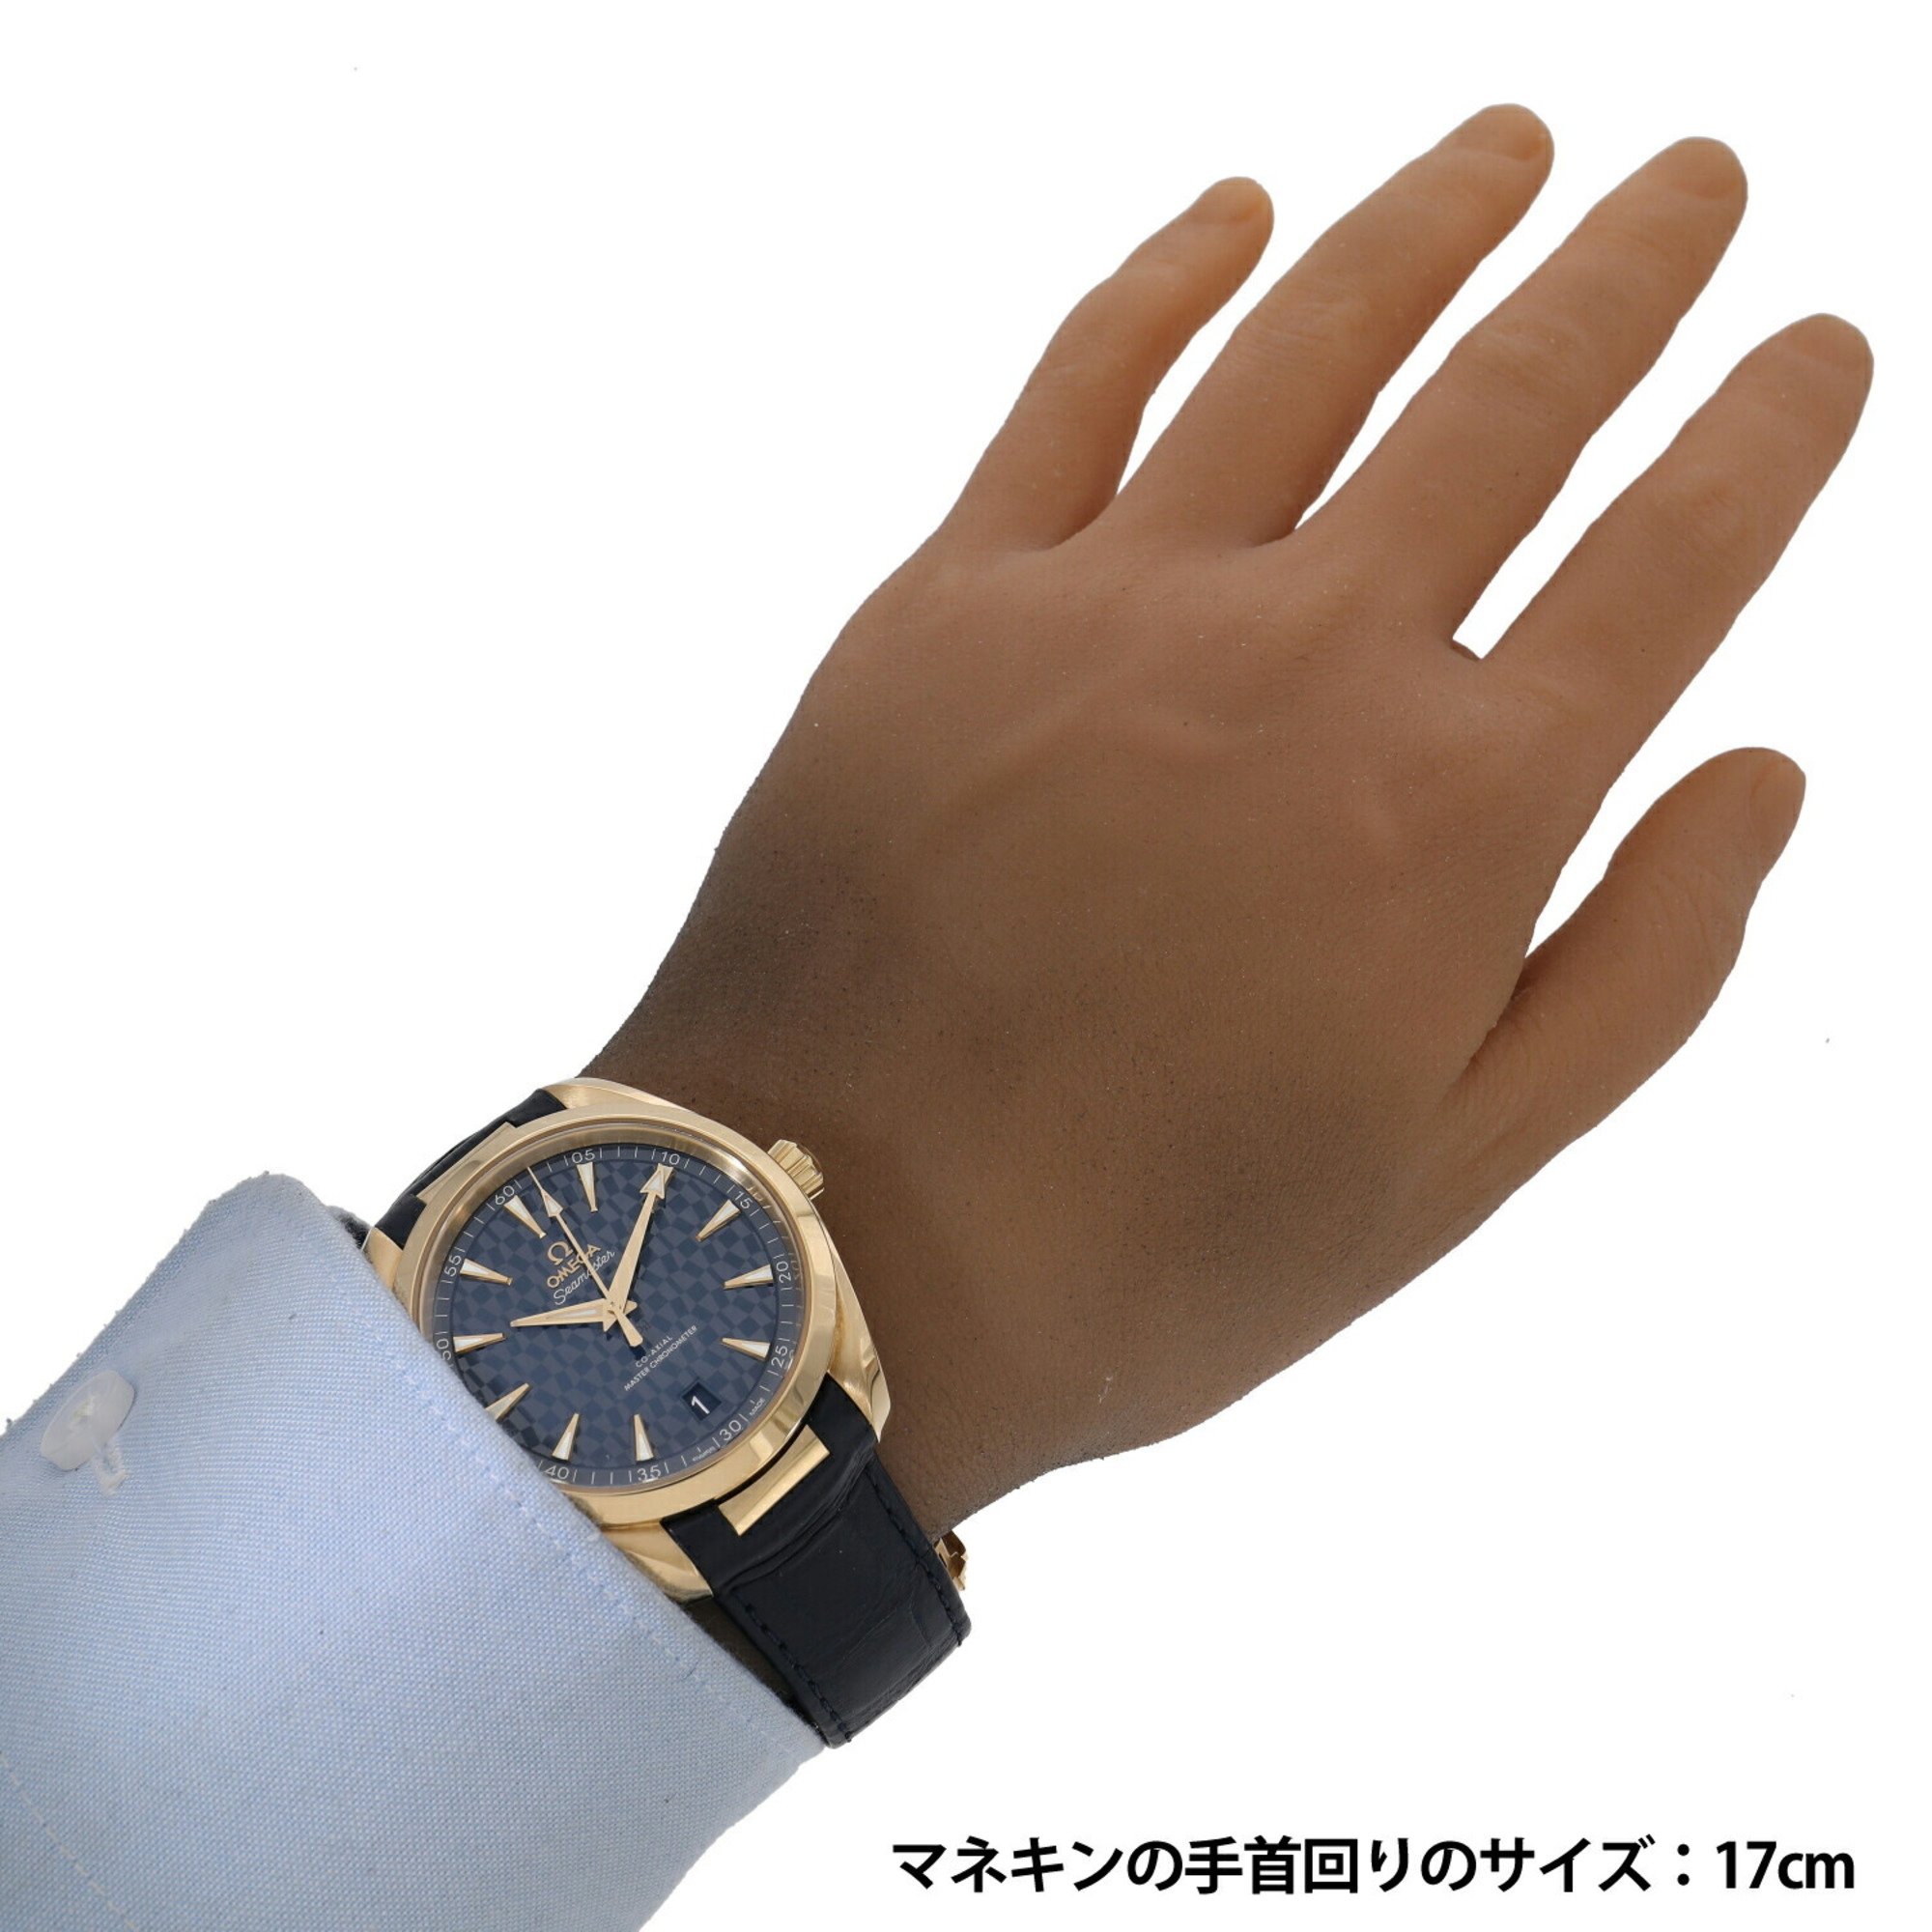 Omega Seamaster Aqua Terra 150M Tokyo 2020 Olympic Commemorative Model 522.53.41.21.03.001 Blue Men's Watch